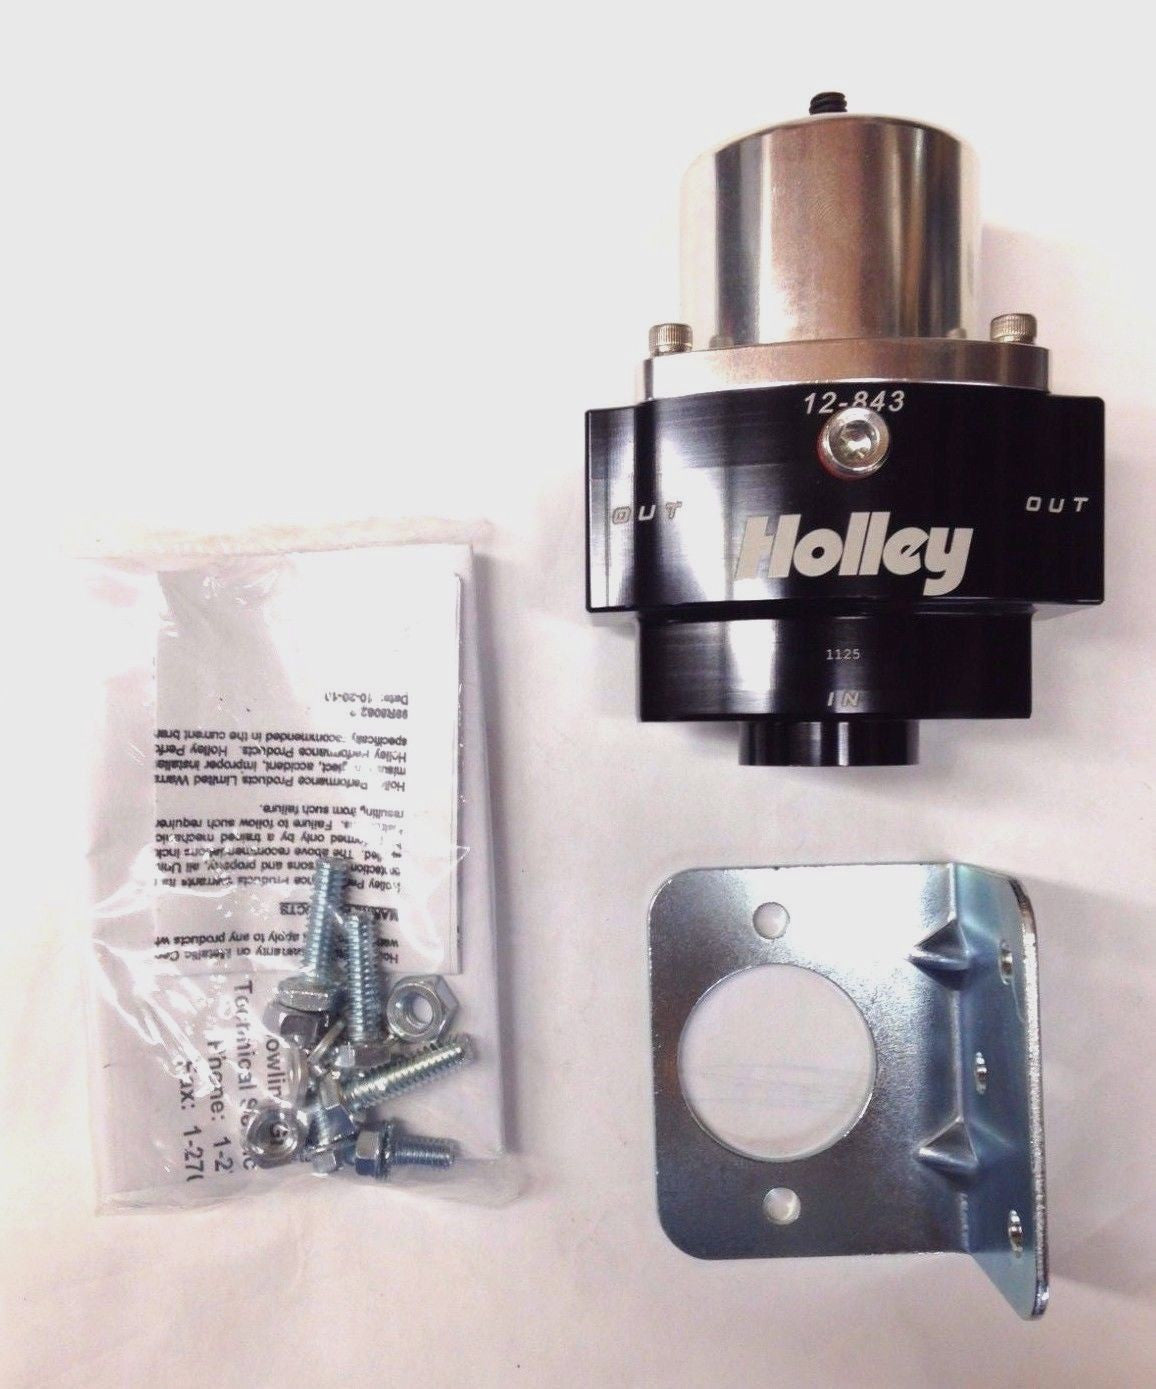 Holley 12-843 HP BILLET CARBURETED FUEL PRESSURE REGULATOR